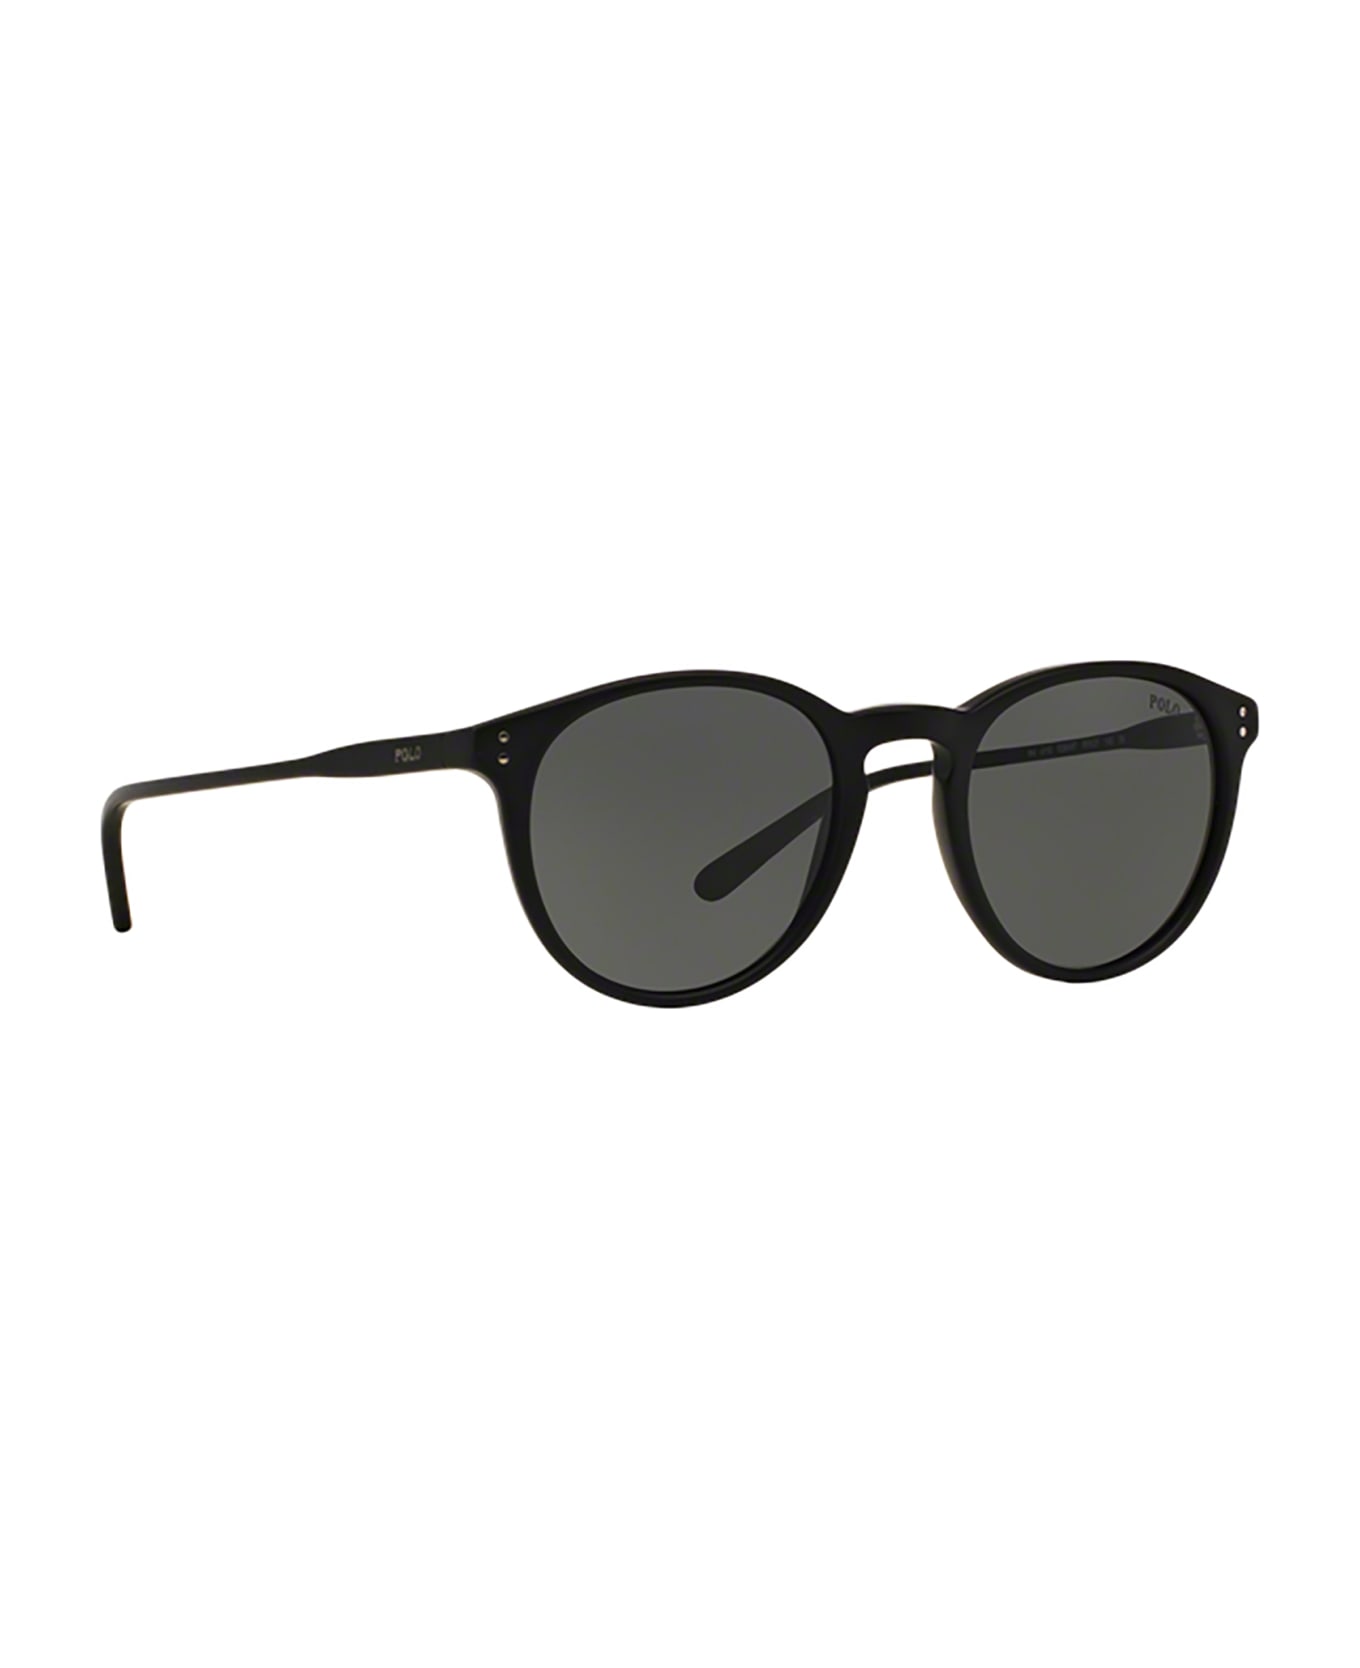 Polo Ralph Lauren 0ph4110 Sunglasses - 528487 MATTE BLACK